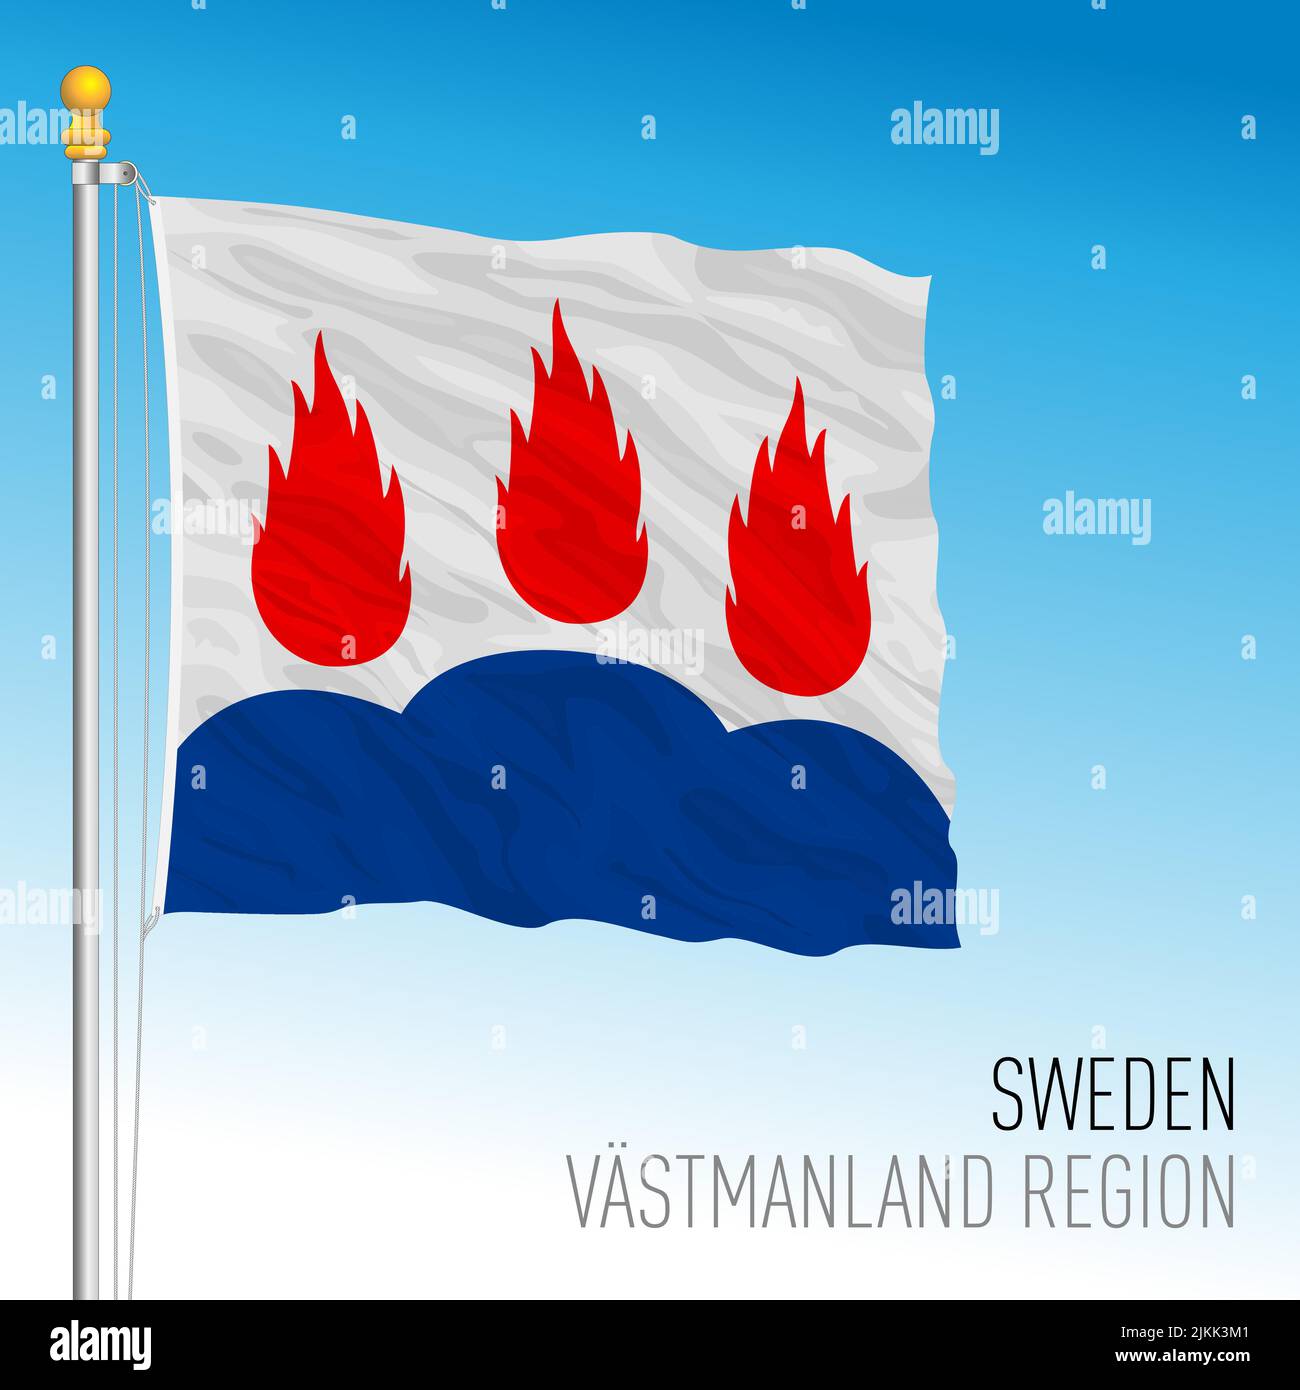 Vastmanland county regional flag, Kingdom of Sweden, vector illustration Stock Vector